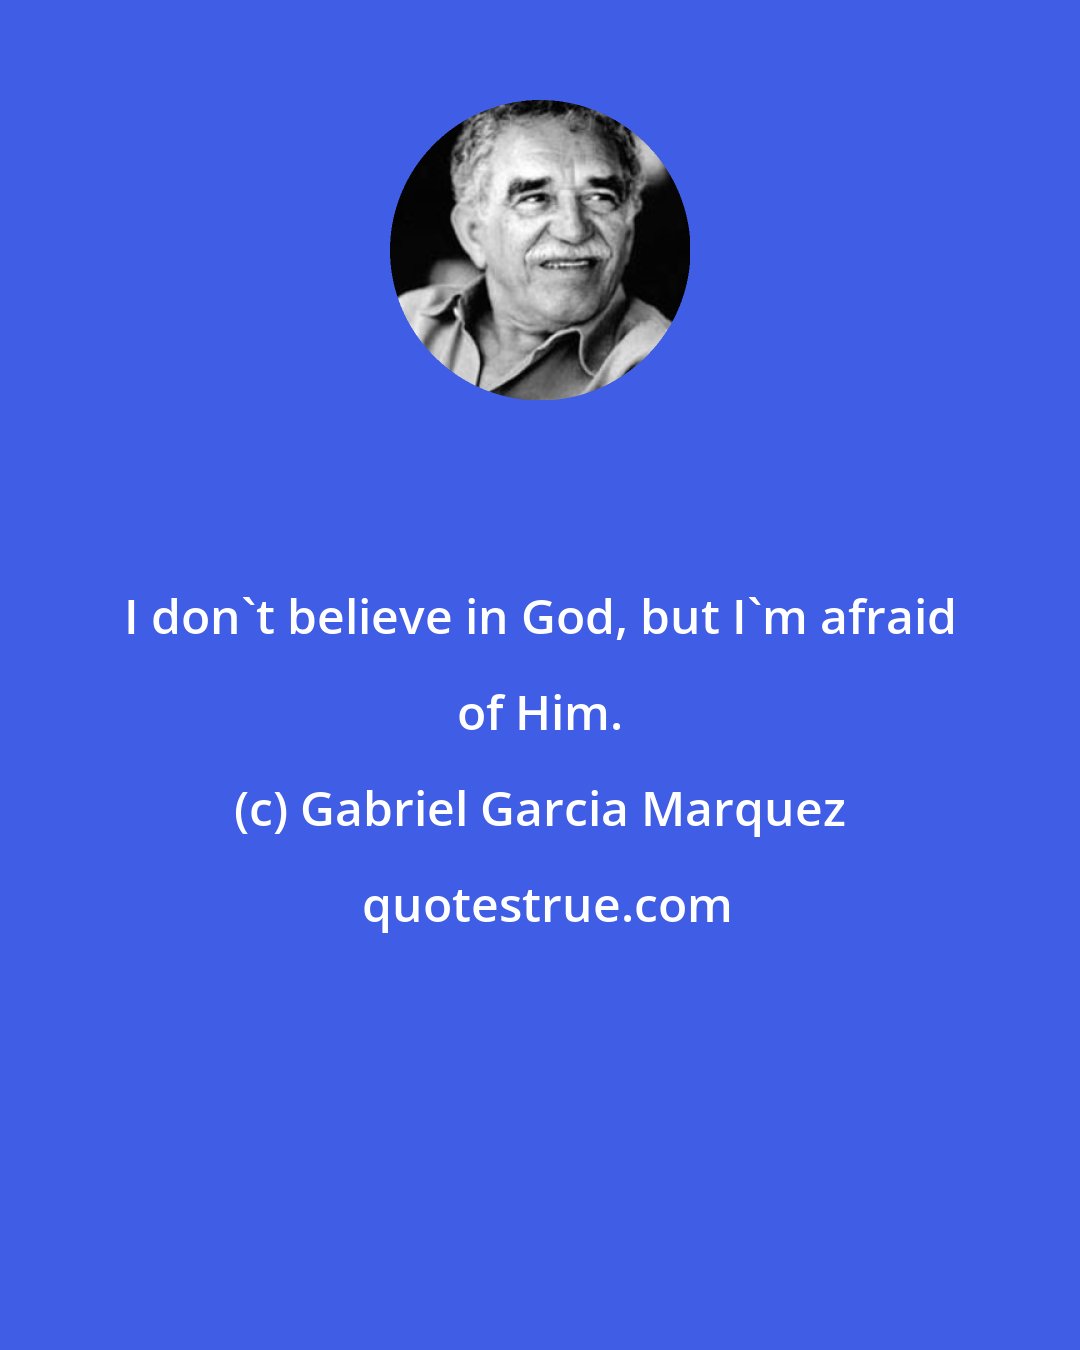 Gabriel Garcia Marquez: I don't believe in God, but I'm afraid of Him.